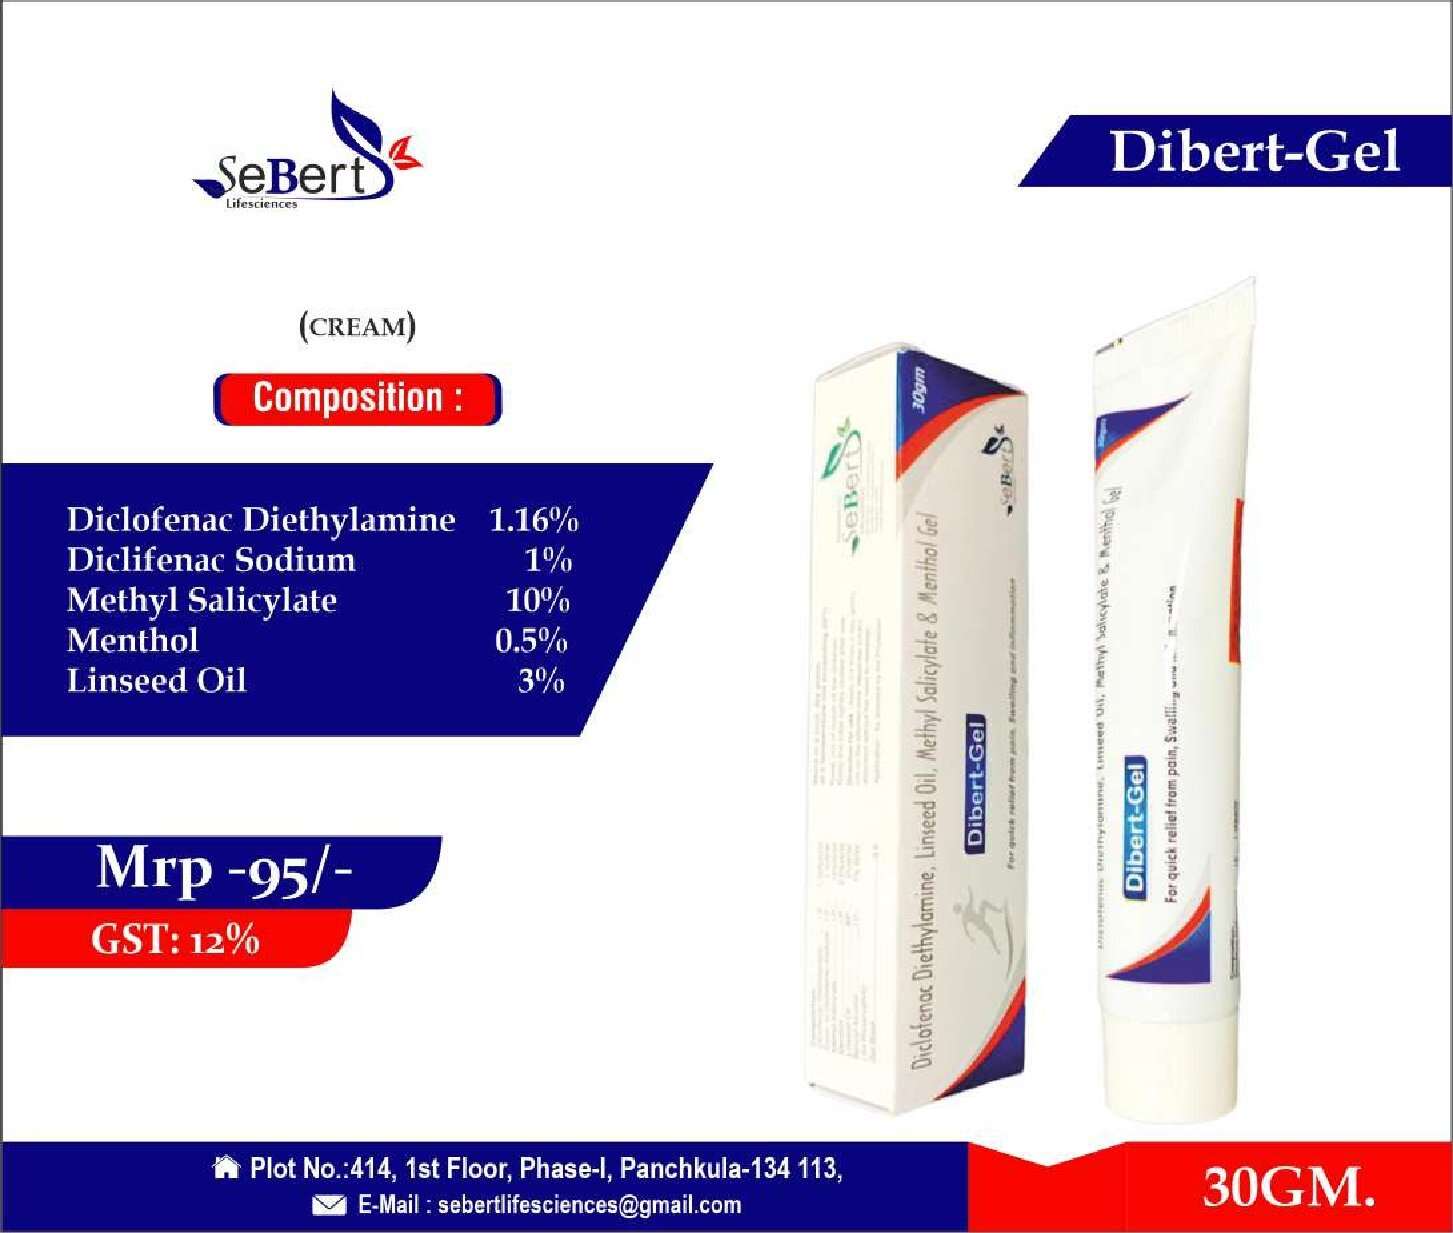 diclofenac diethylamine 1.16%+diclifenac sodium 1%
+methyl salicylate 10%+menthol 0.5%+linseed oil 3%